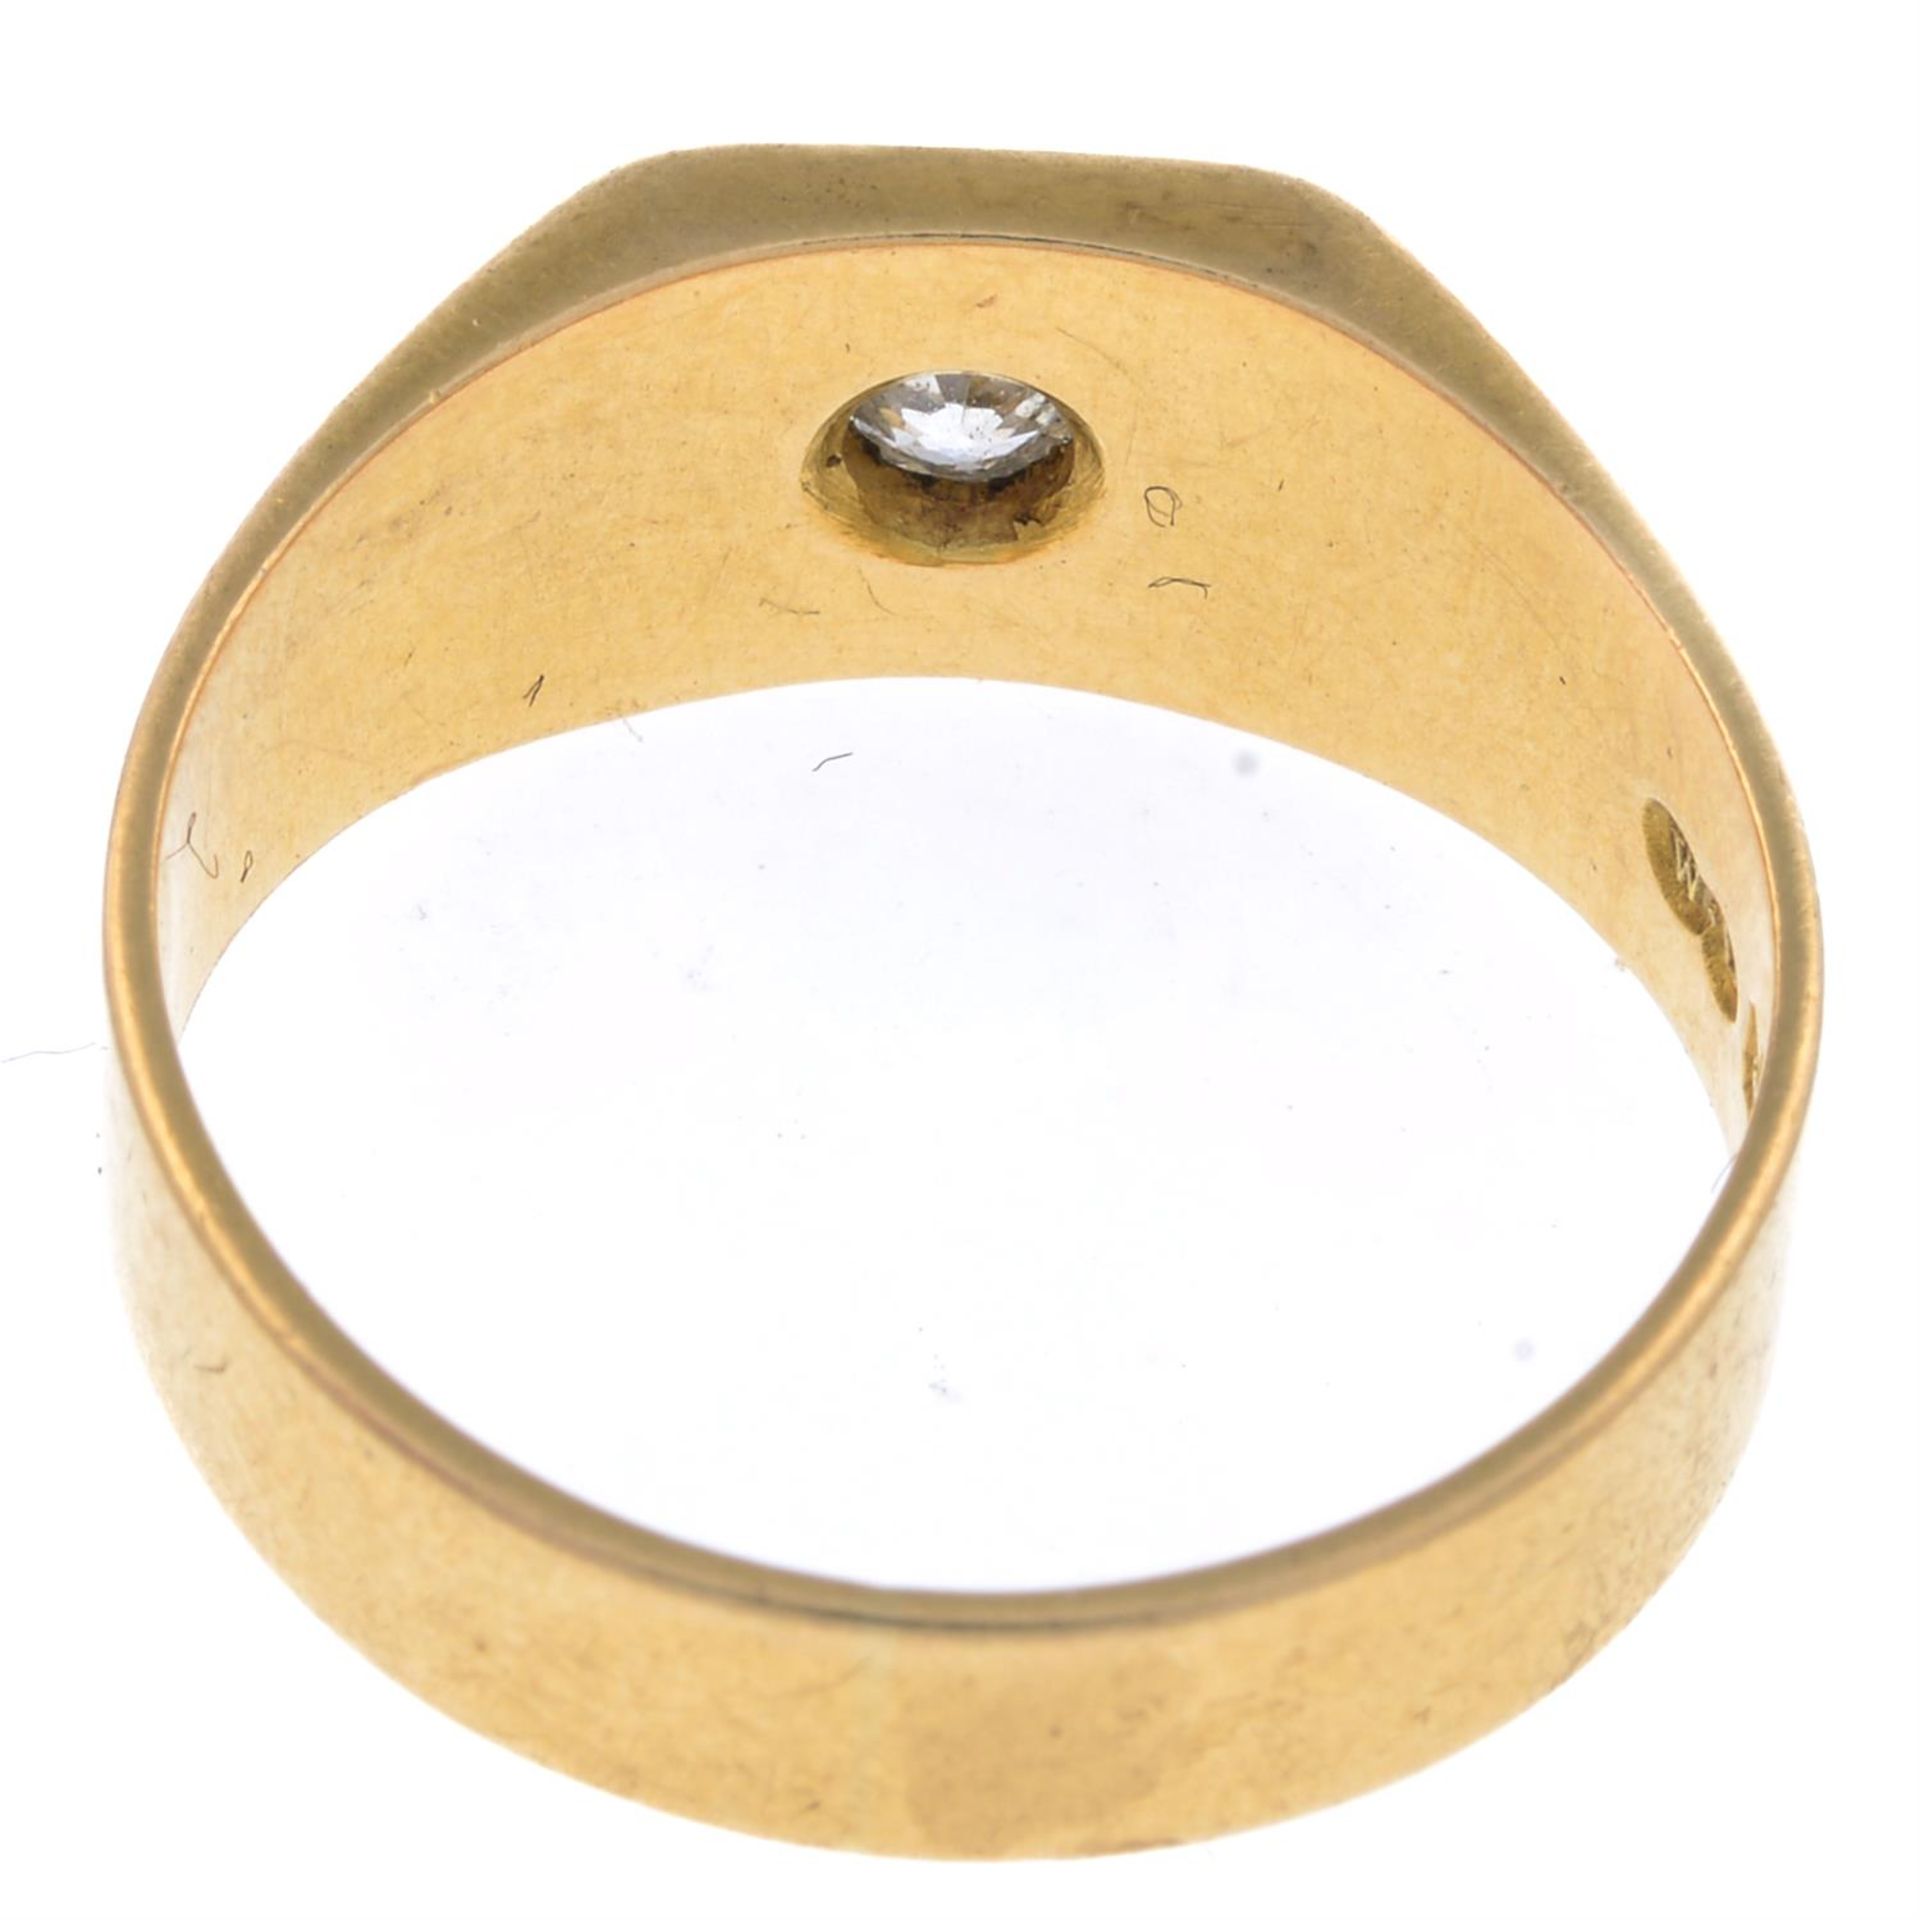 Early 20th century diamond signet ring - Image 2 of 2